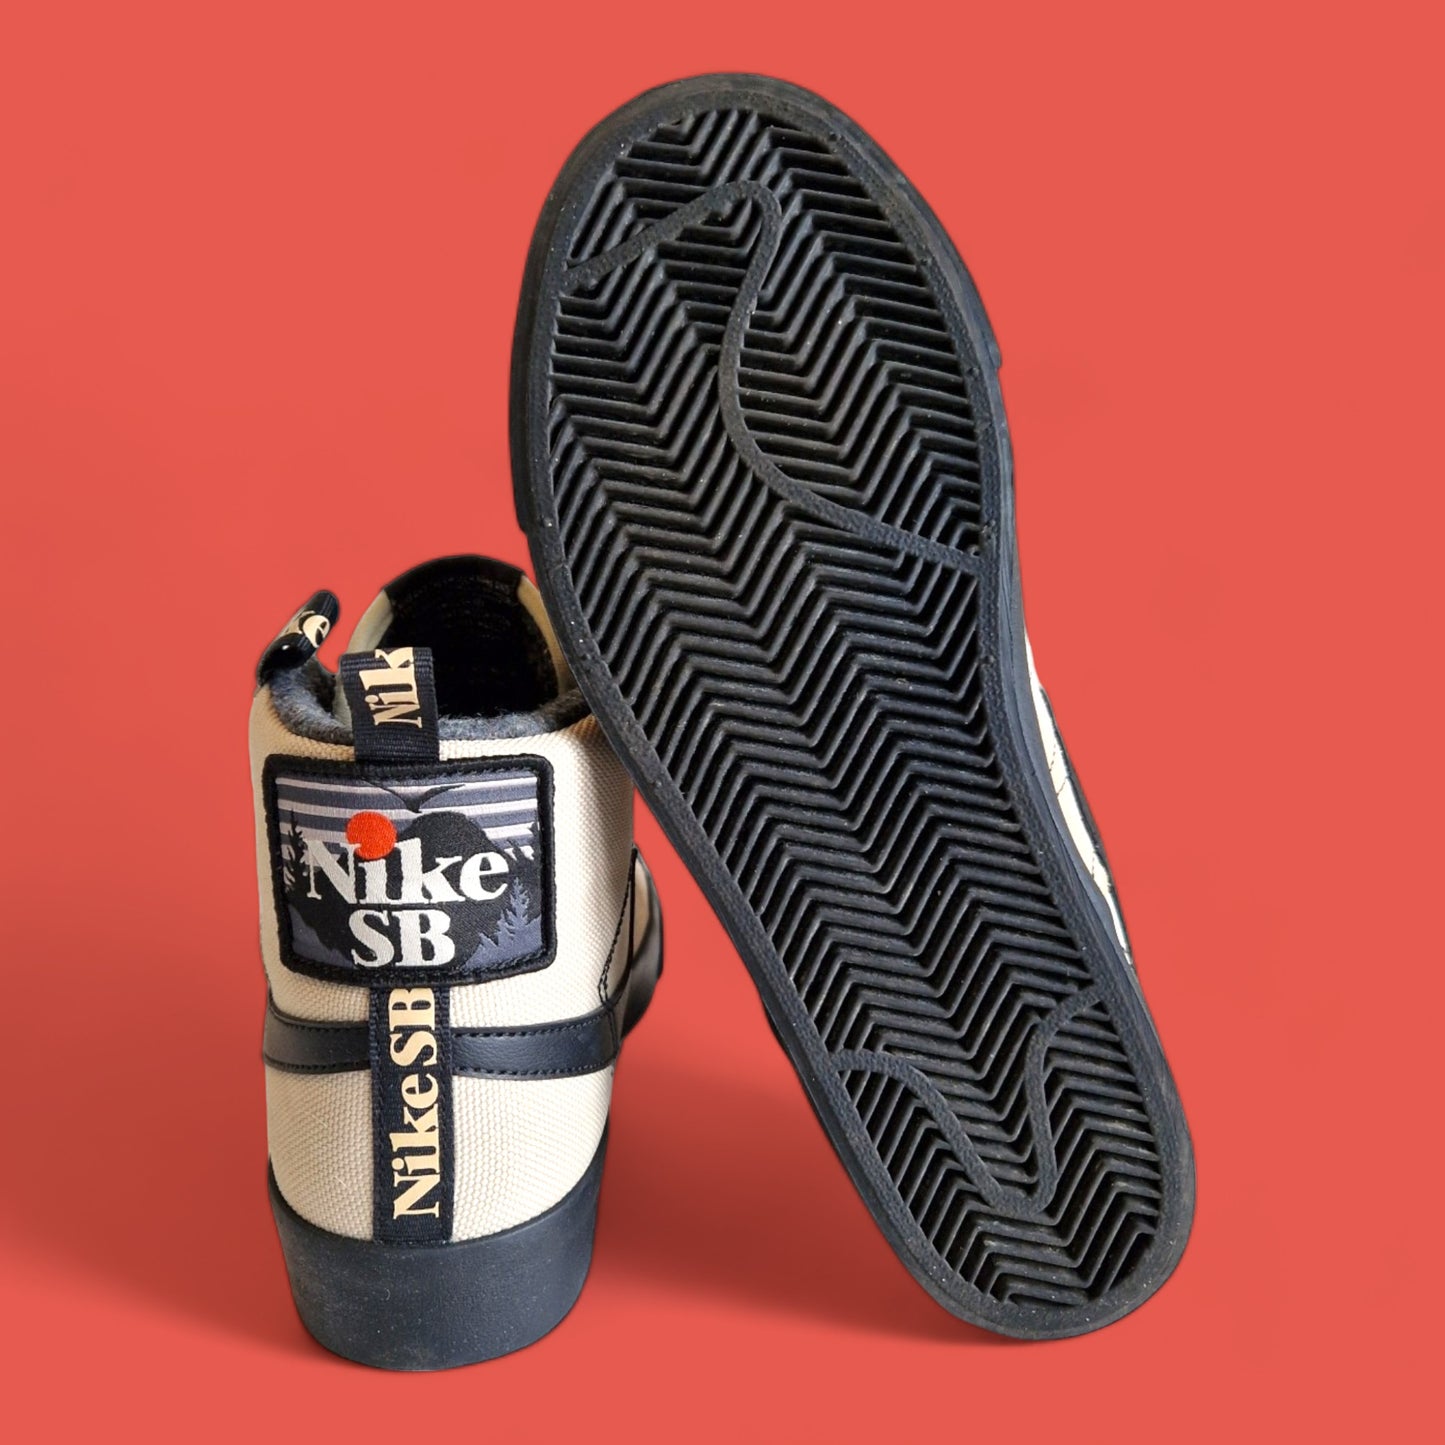 NIKE SB Zoom Blazer Mid Premium 'Acclimate Pack Desert' - Rattan / Black-Rattan - Size 5.5